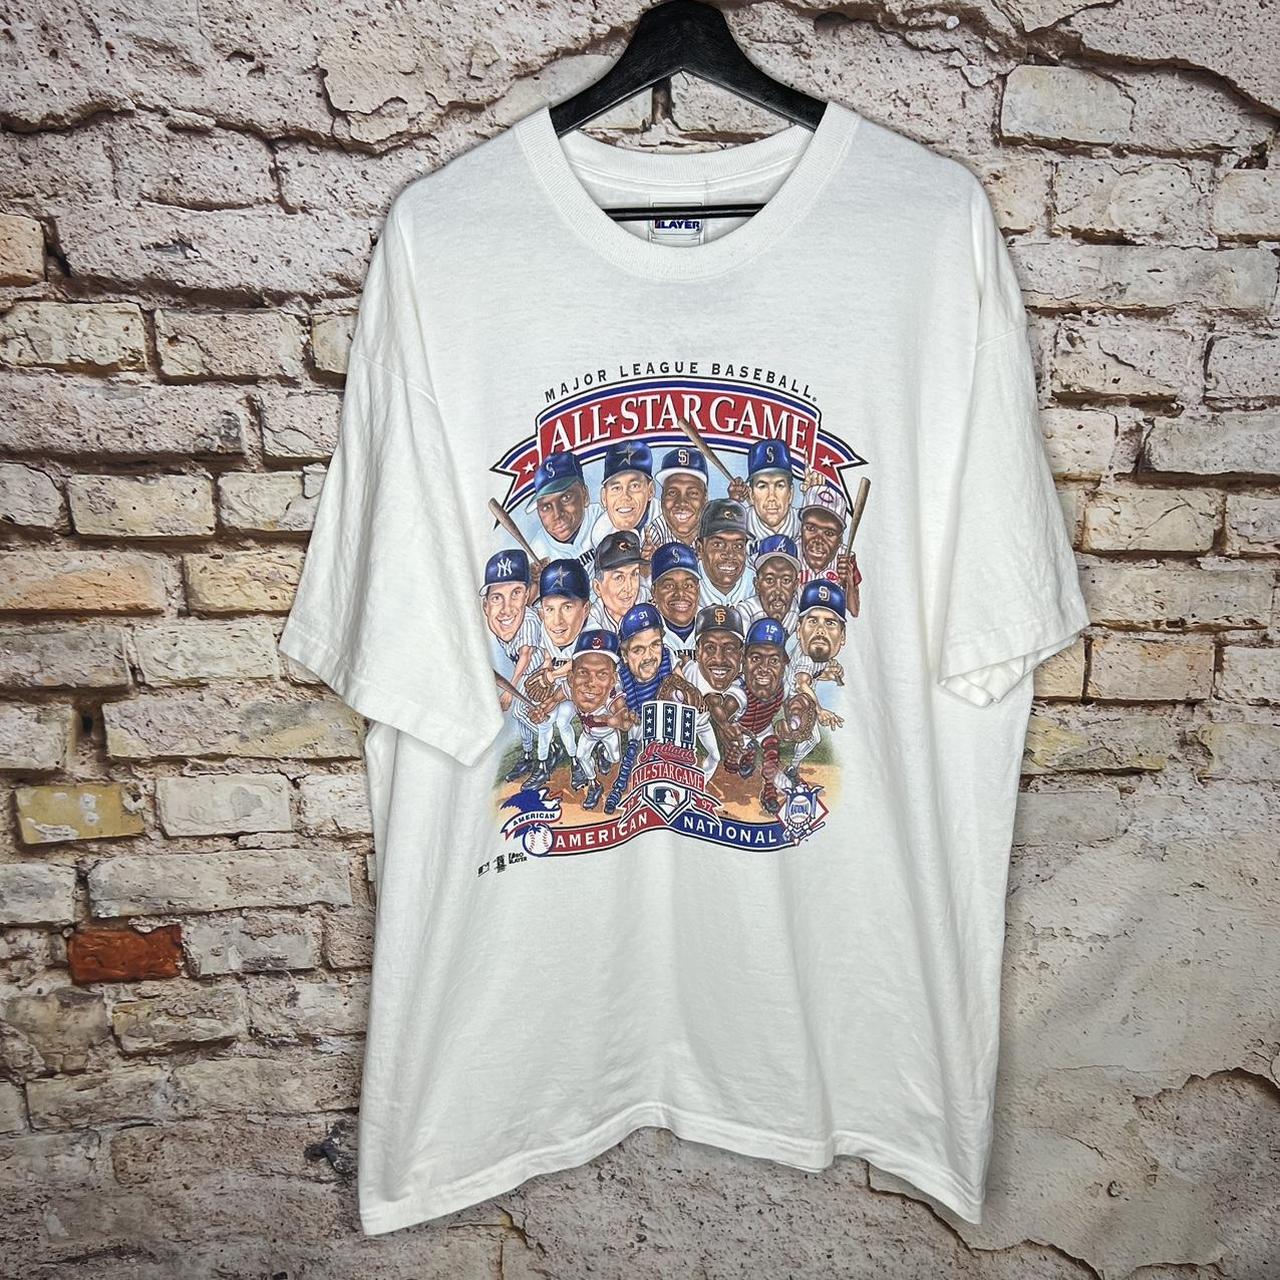 Cleveland Indians MLB Baseball T-Shirt Men's Size XL - Depop